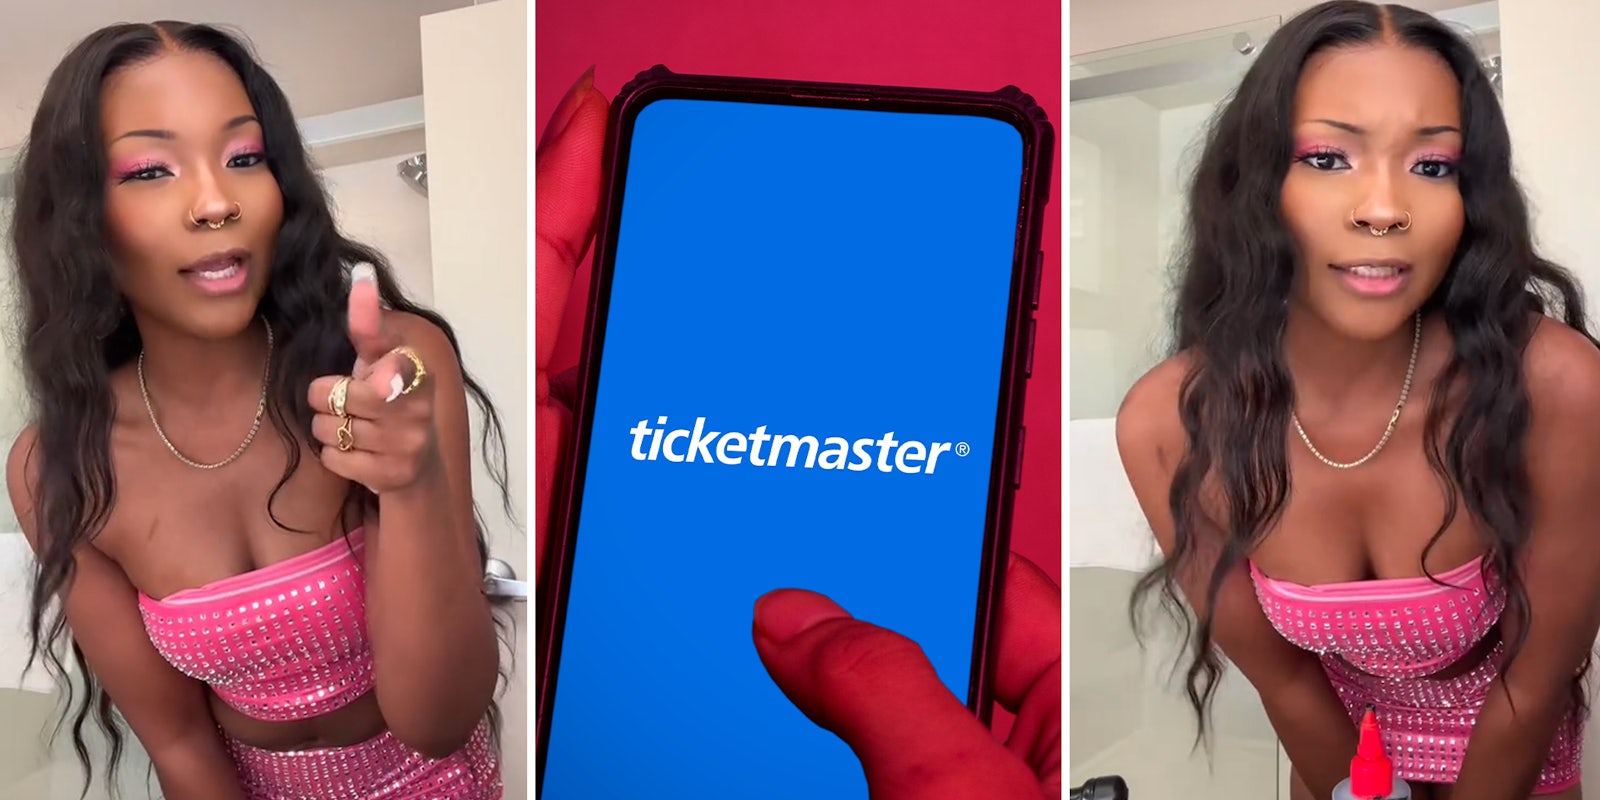 Customer says Ticketmaster canceled her $400 Nicki Minaj tickets